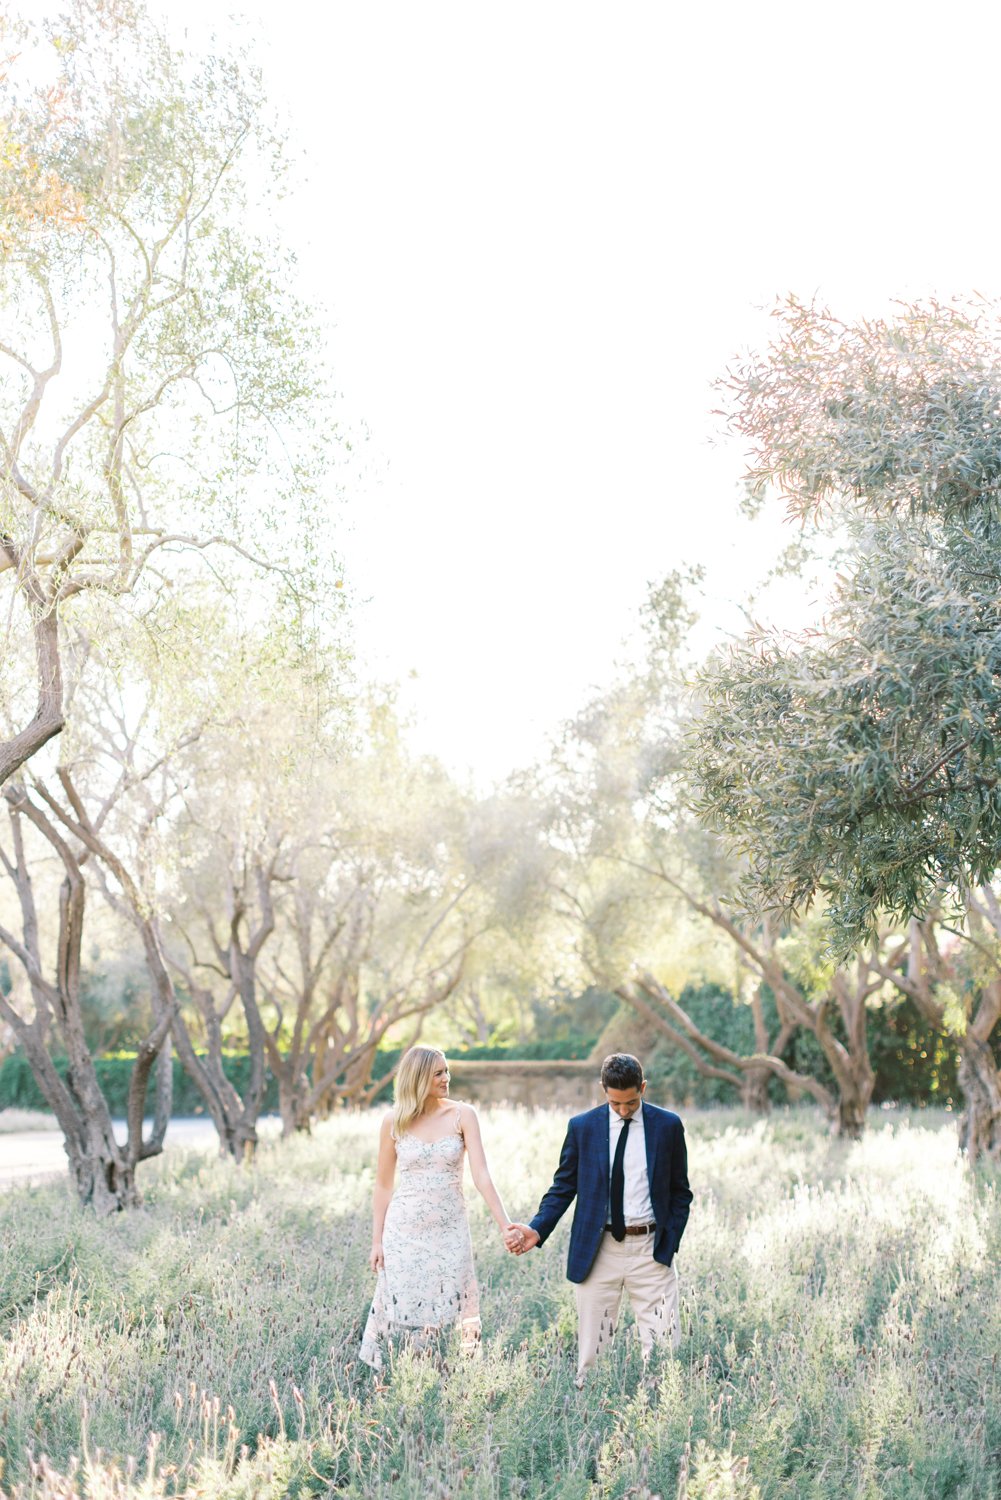 wisteria-photography.com | Wisteria Photography | San Ysidro Ranch | Weddings Engagement | Southern California Photographer-14.jpg